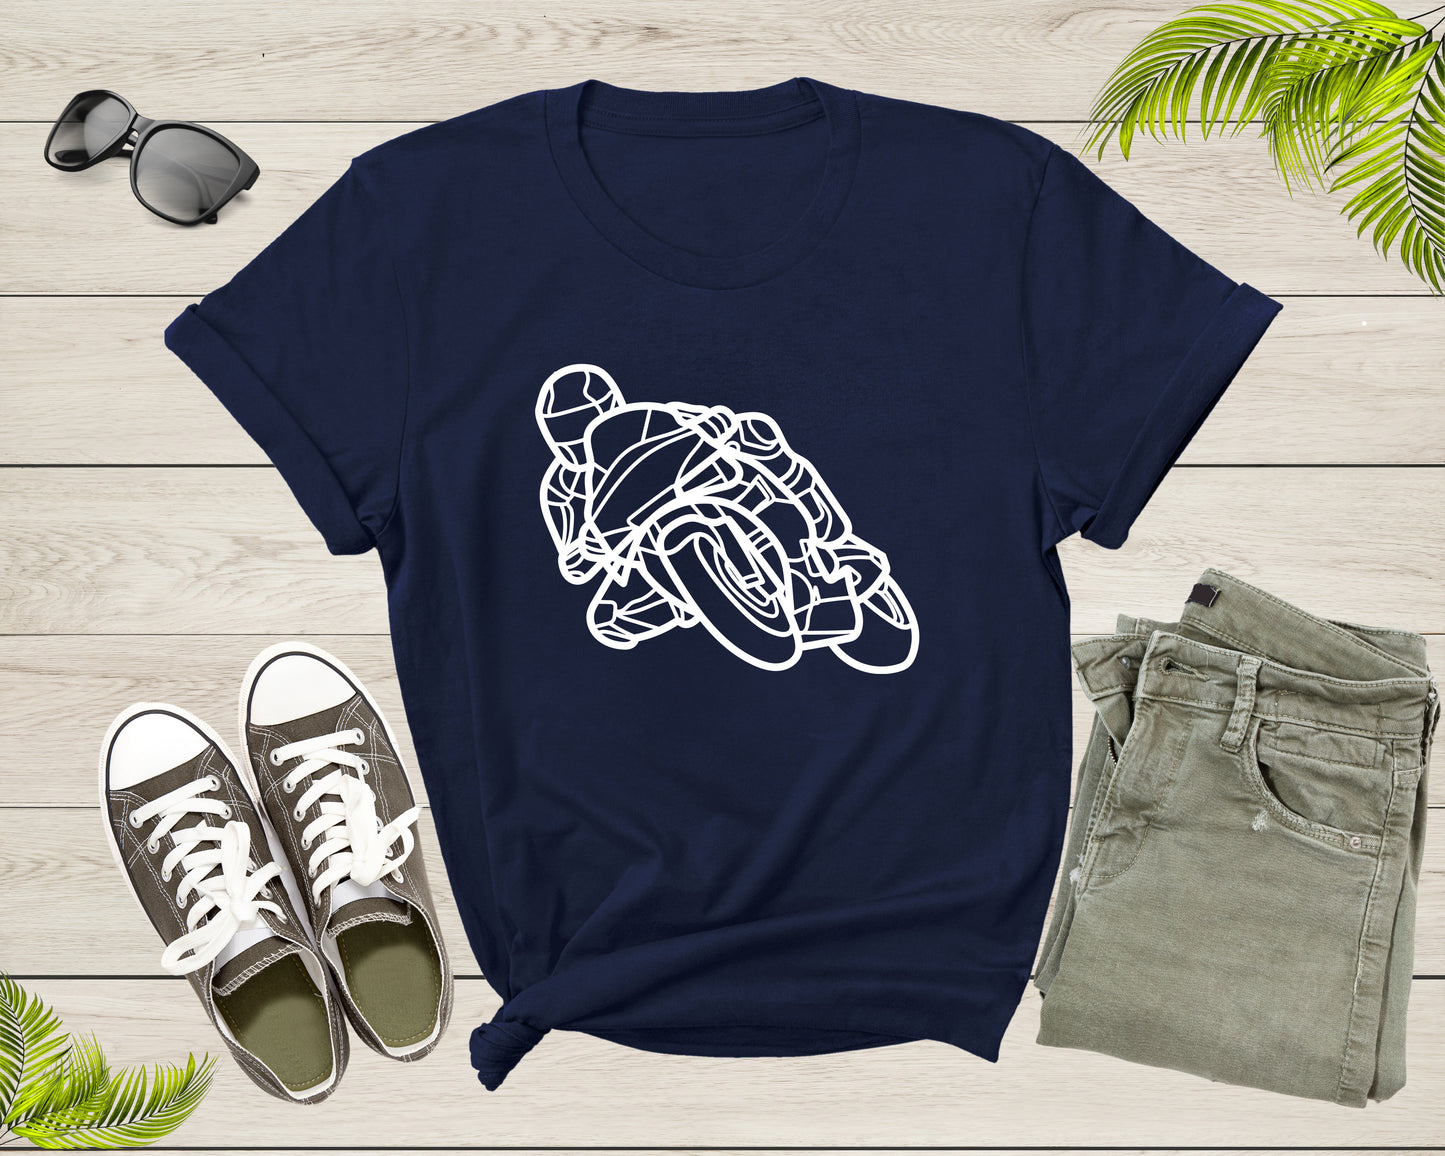 Motorcycle Motorbike Biker Racer Sport Bike Racer Rider T-Shirt Motorcycle Lover Gift T Shirt for Men Women Boys Girls Graphic Tshirt